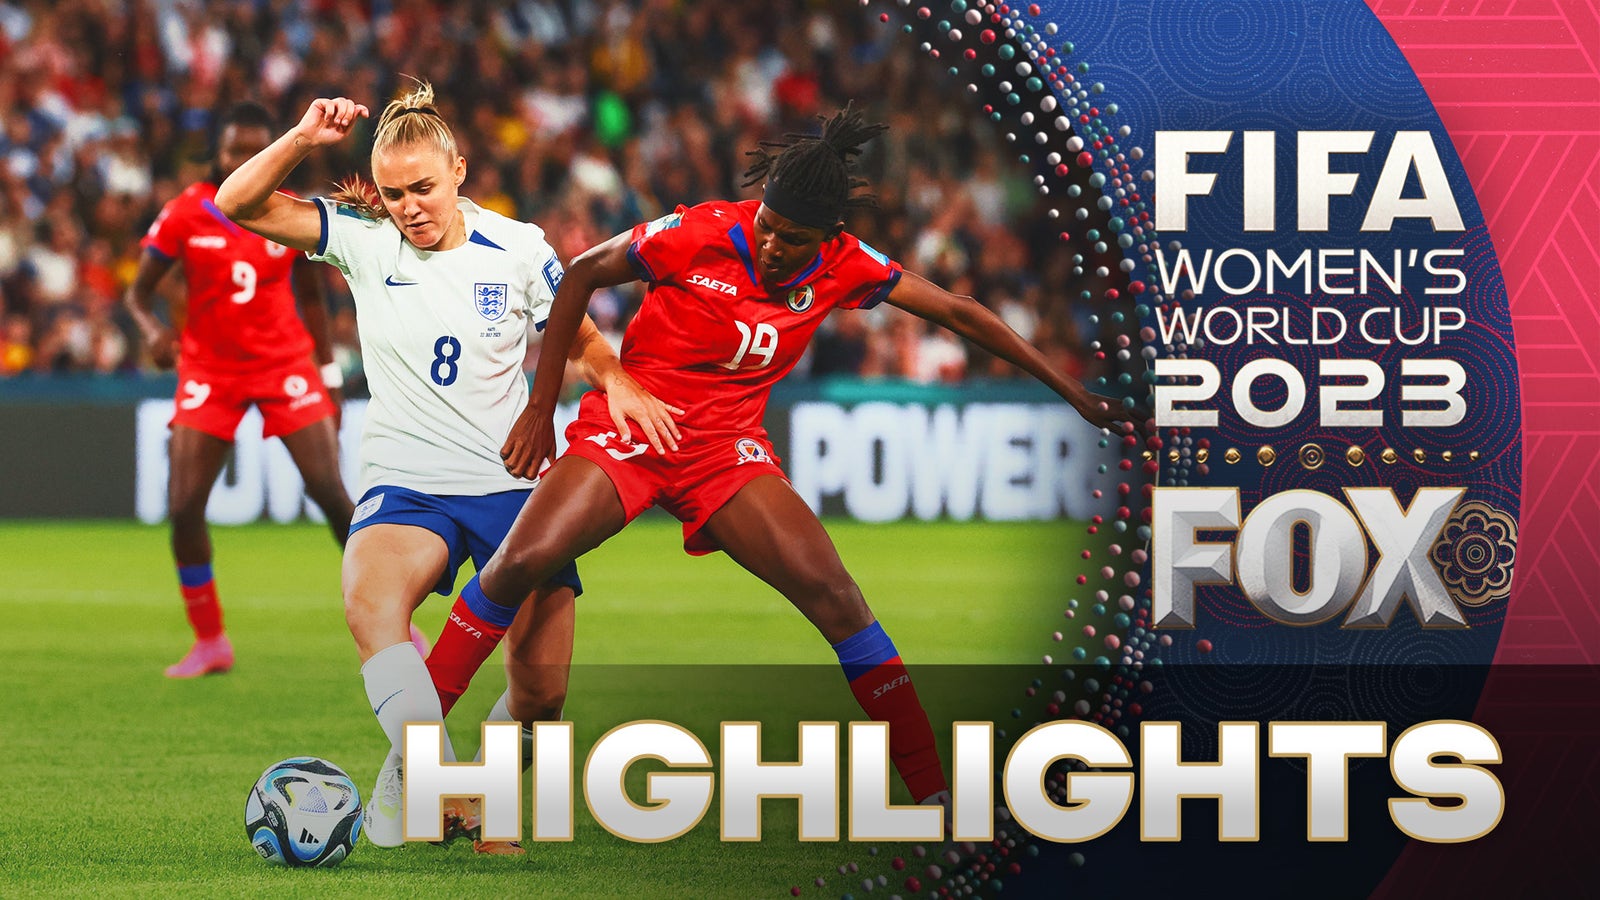 Highlight: England held Haiti